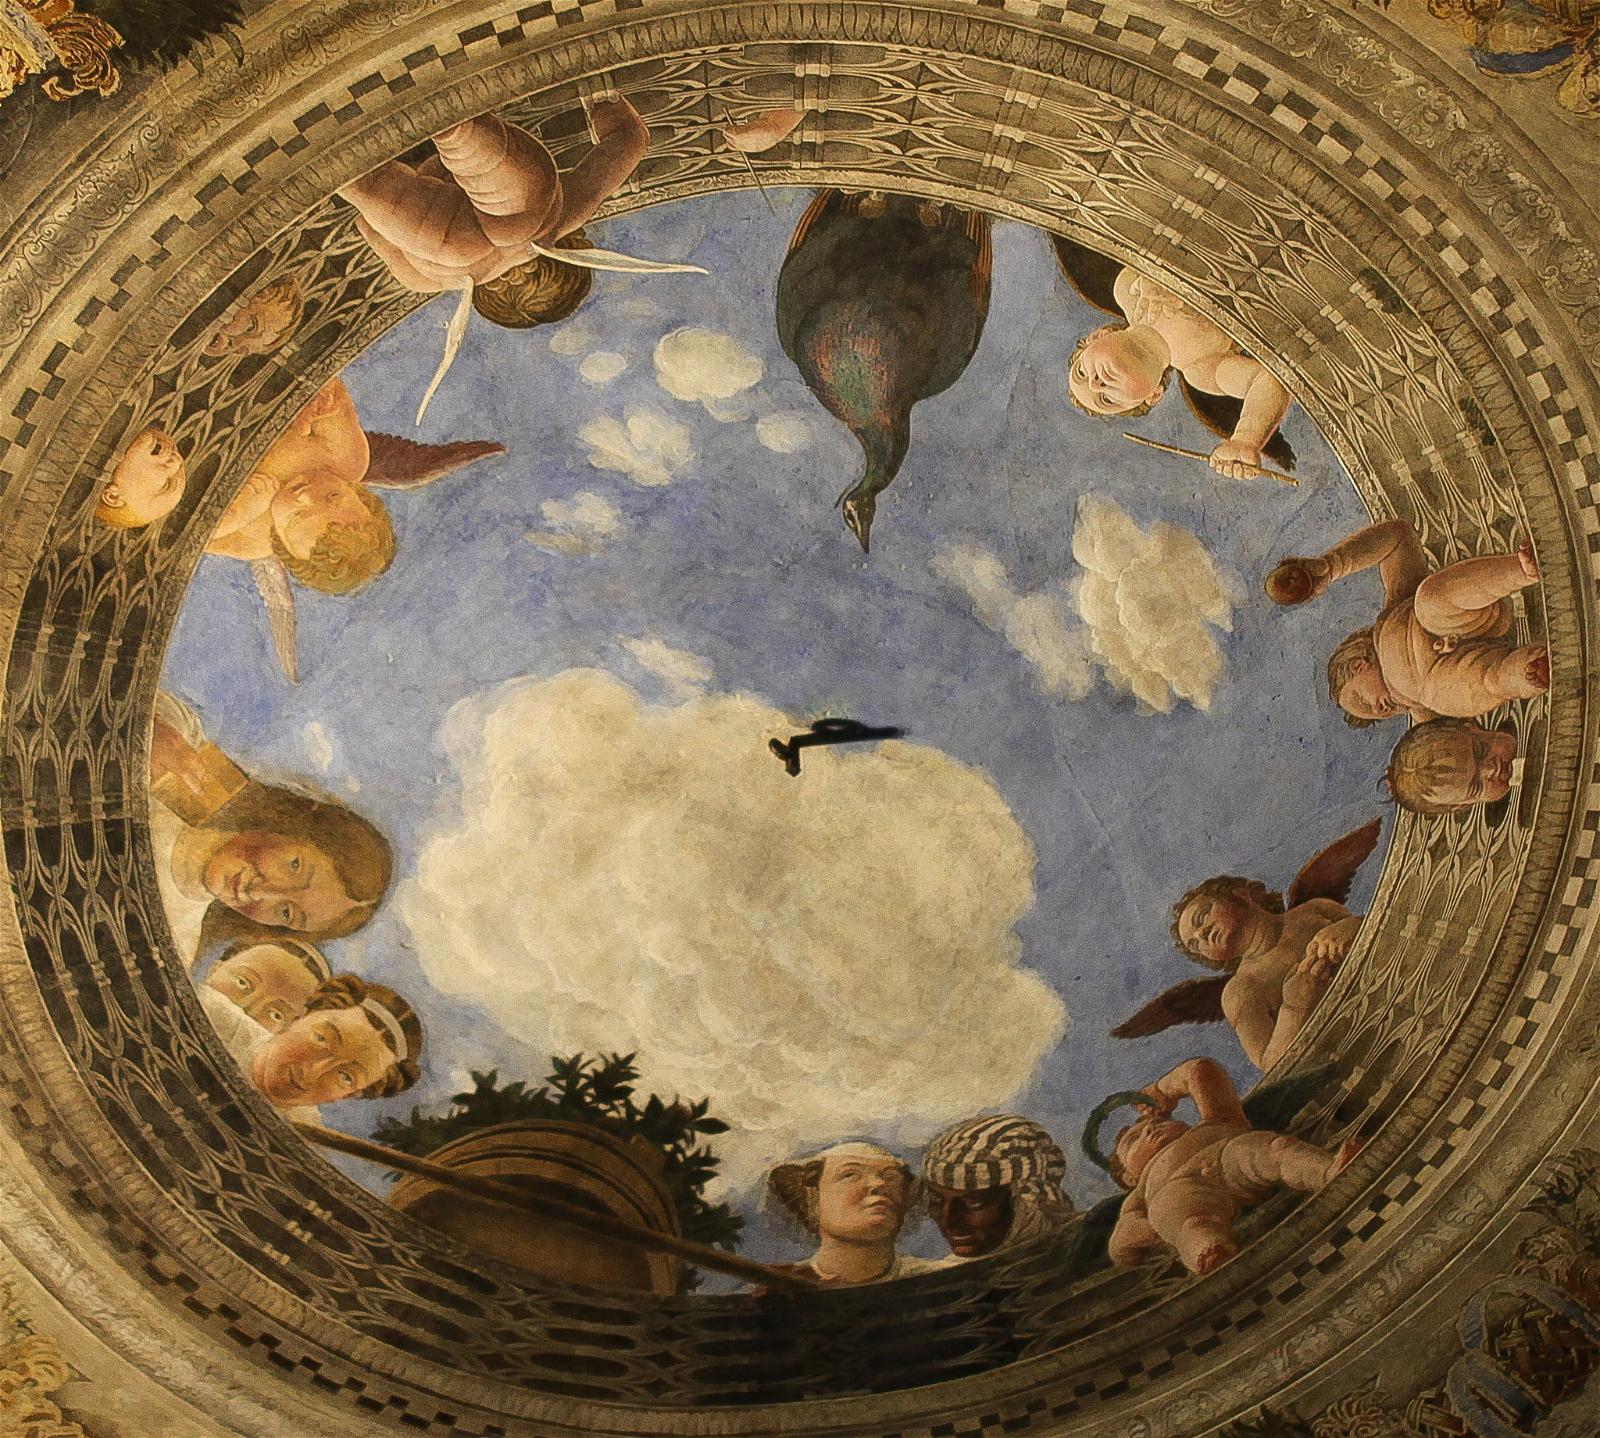 Obrázek Castello di San Giorgio. italy castle painting italia mantova castello mantua mantegna lombardy andreamantegna castellodisangiorgio ceilingpainting